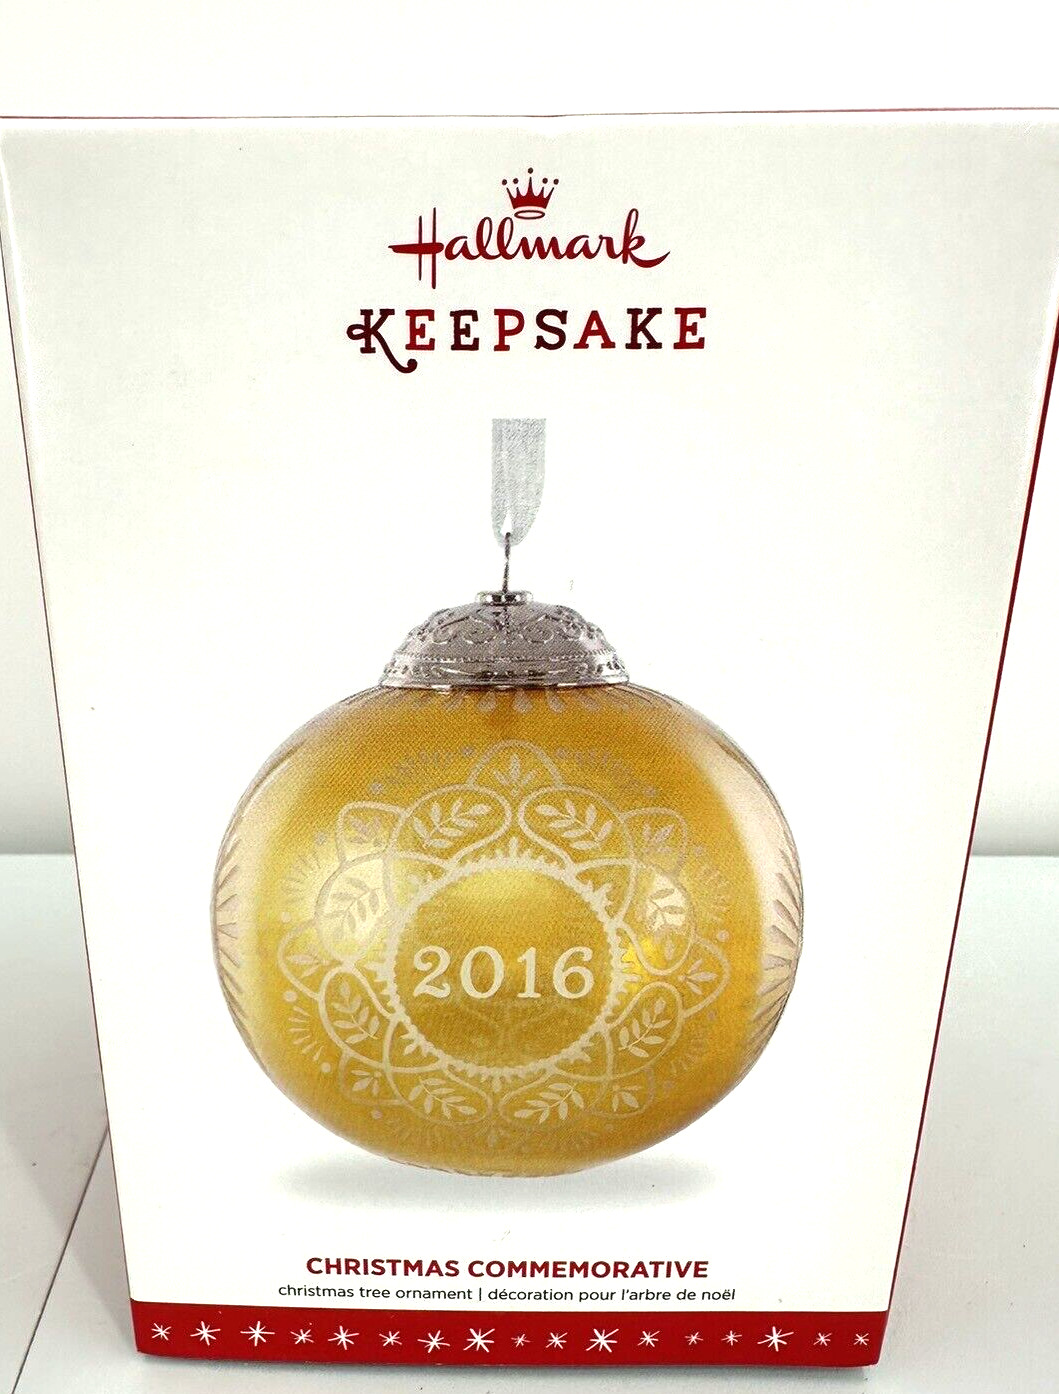 Hallmark Keepsake Ornament 2016 CHRISTMAS COMMEMORATIVE